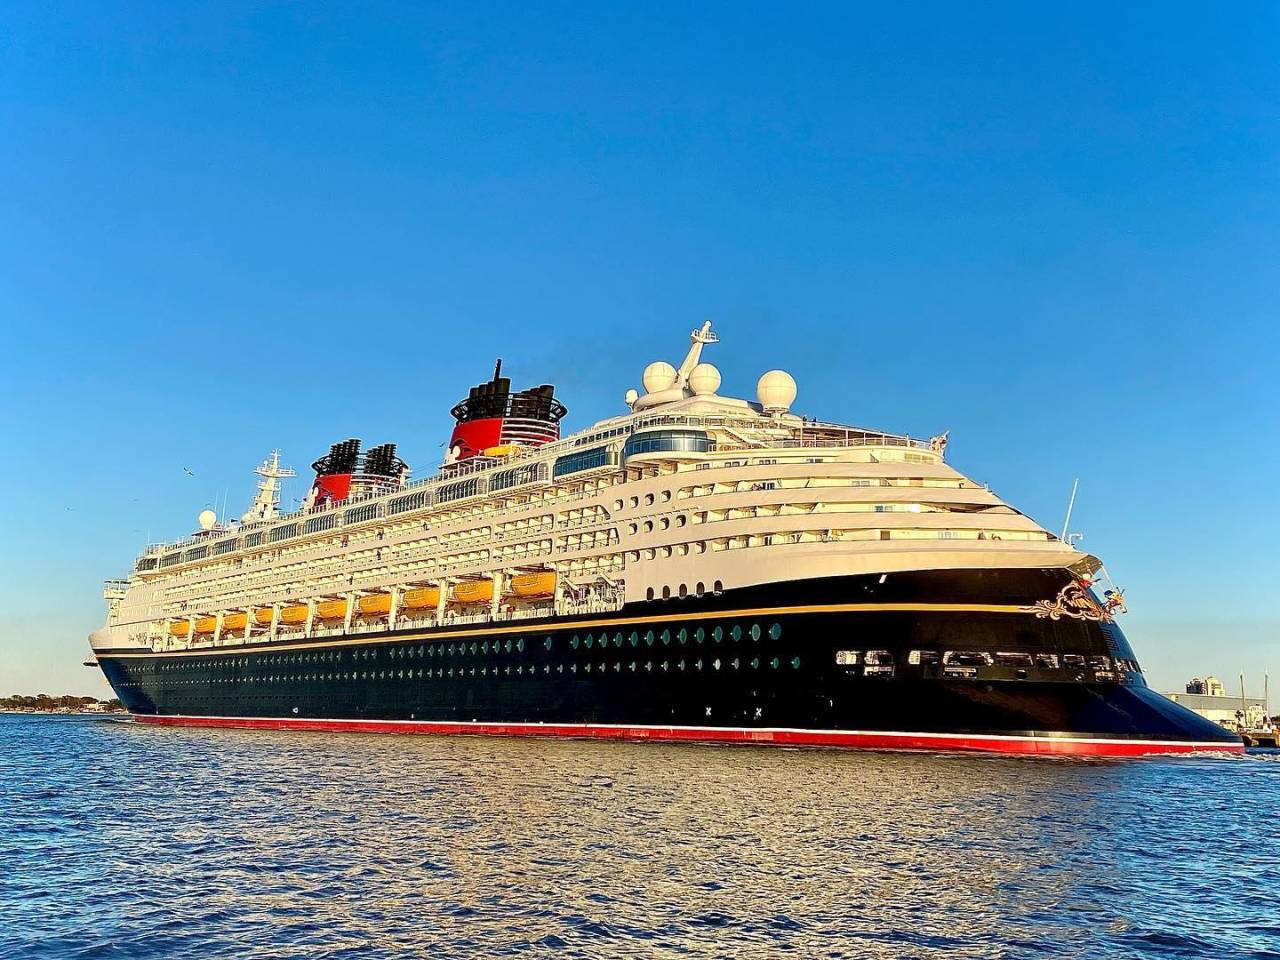 the Disney Wonder, a Disney cruise ship